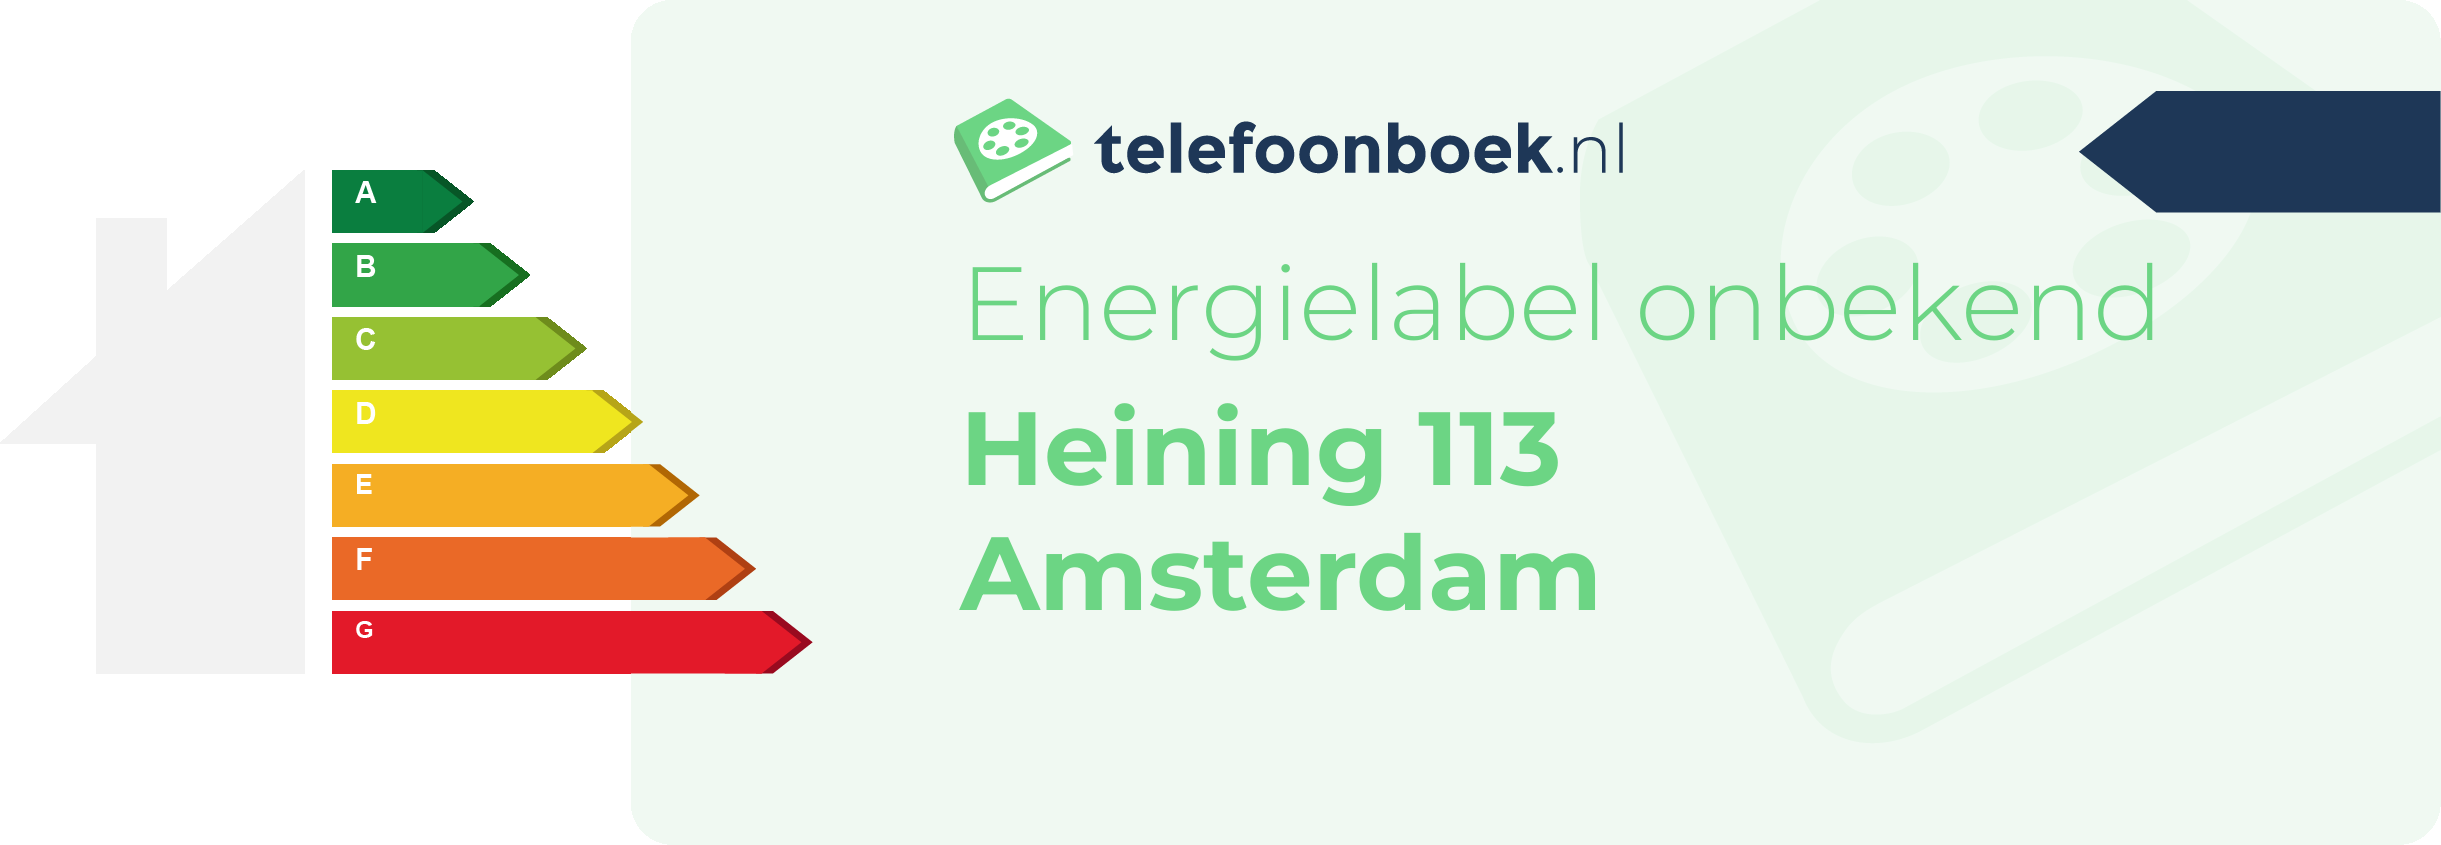 Energielabel Heining 113 Amsterdam